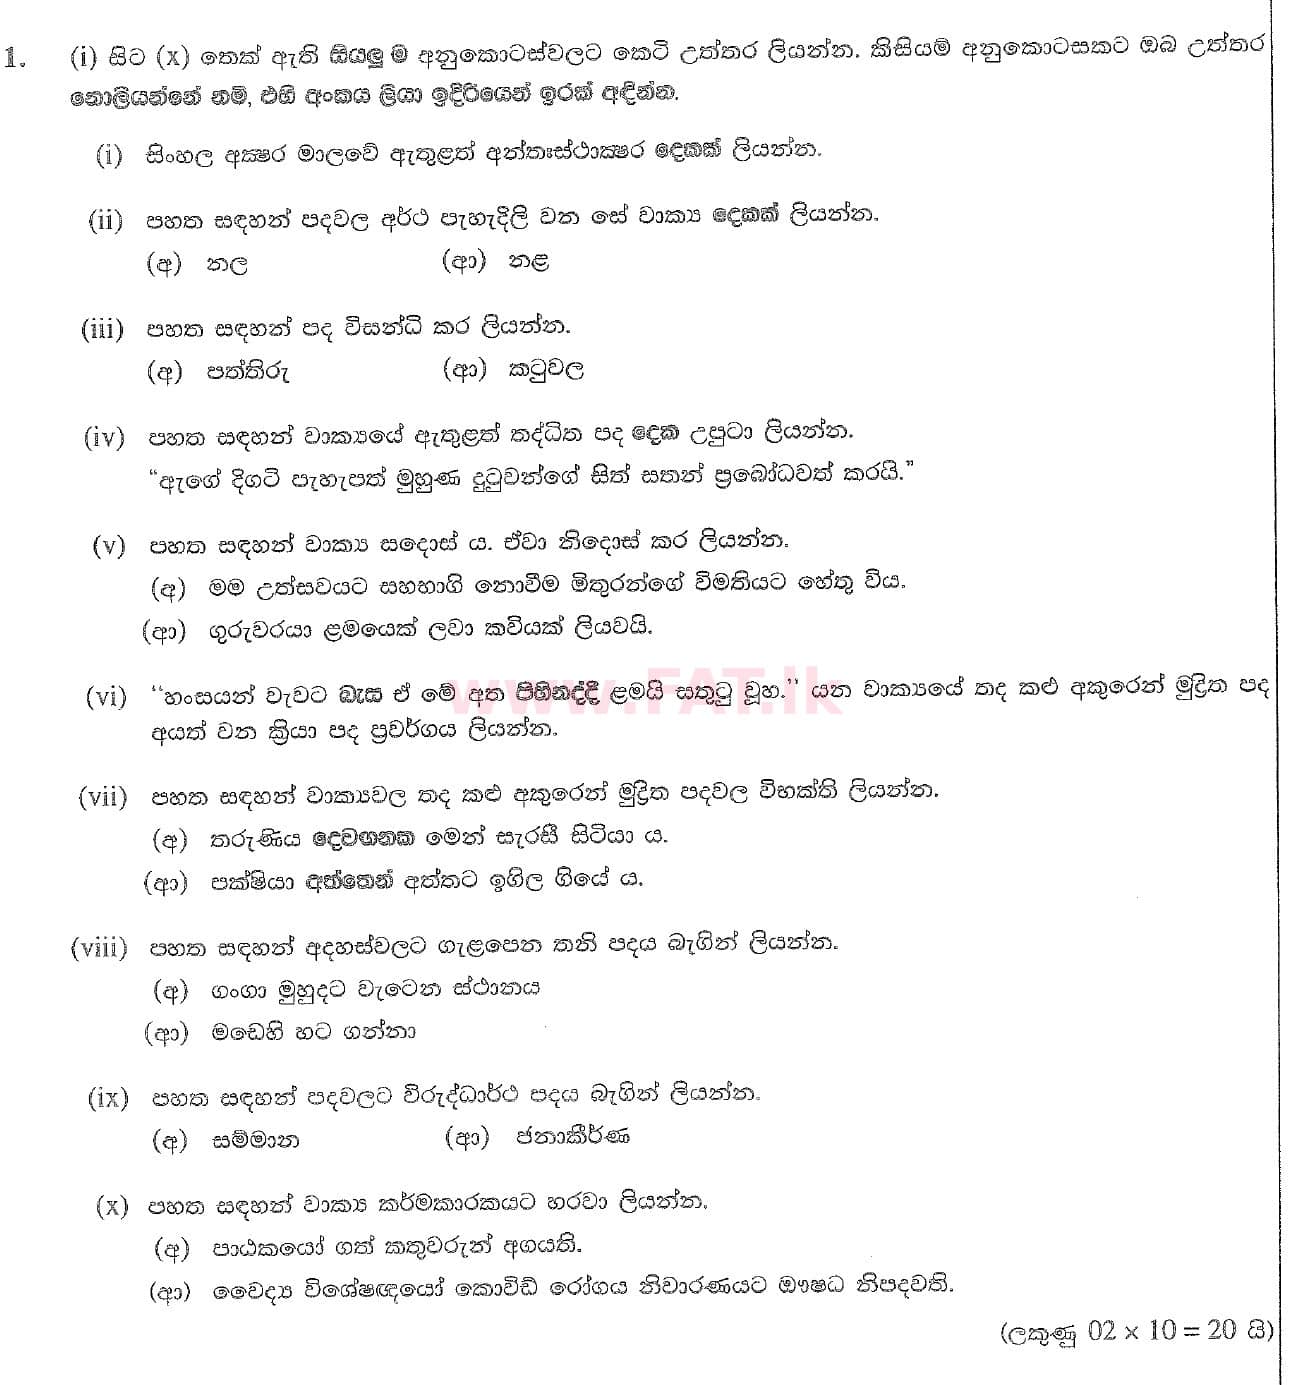 National Syllabus : Ordinary Level (O/L) Sinhala Language and Literature - 2020 March - Paper II (සිංහල Medium) 1 1